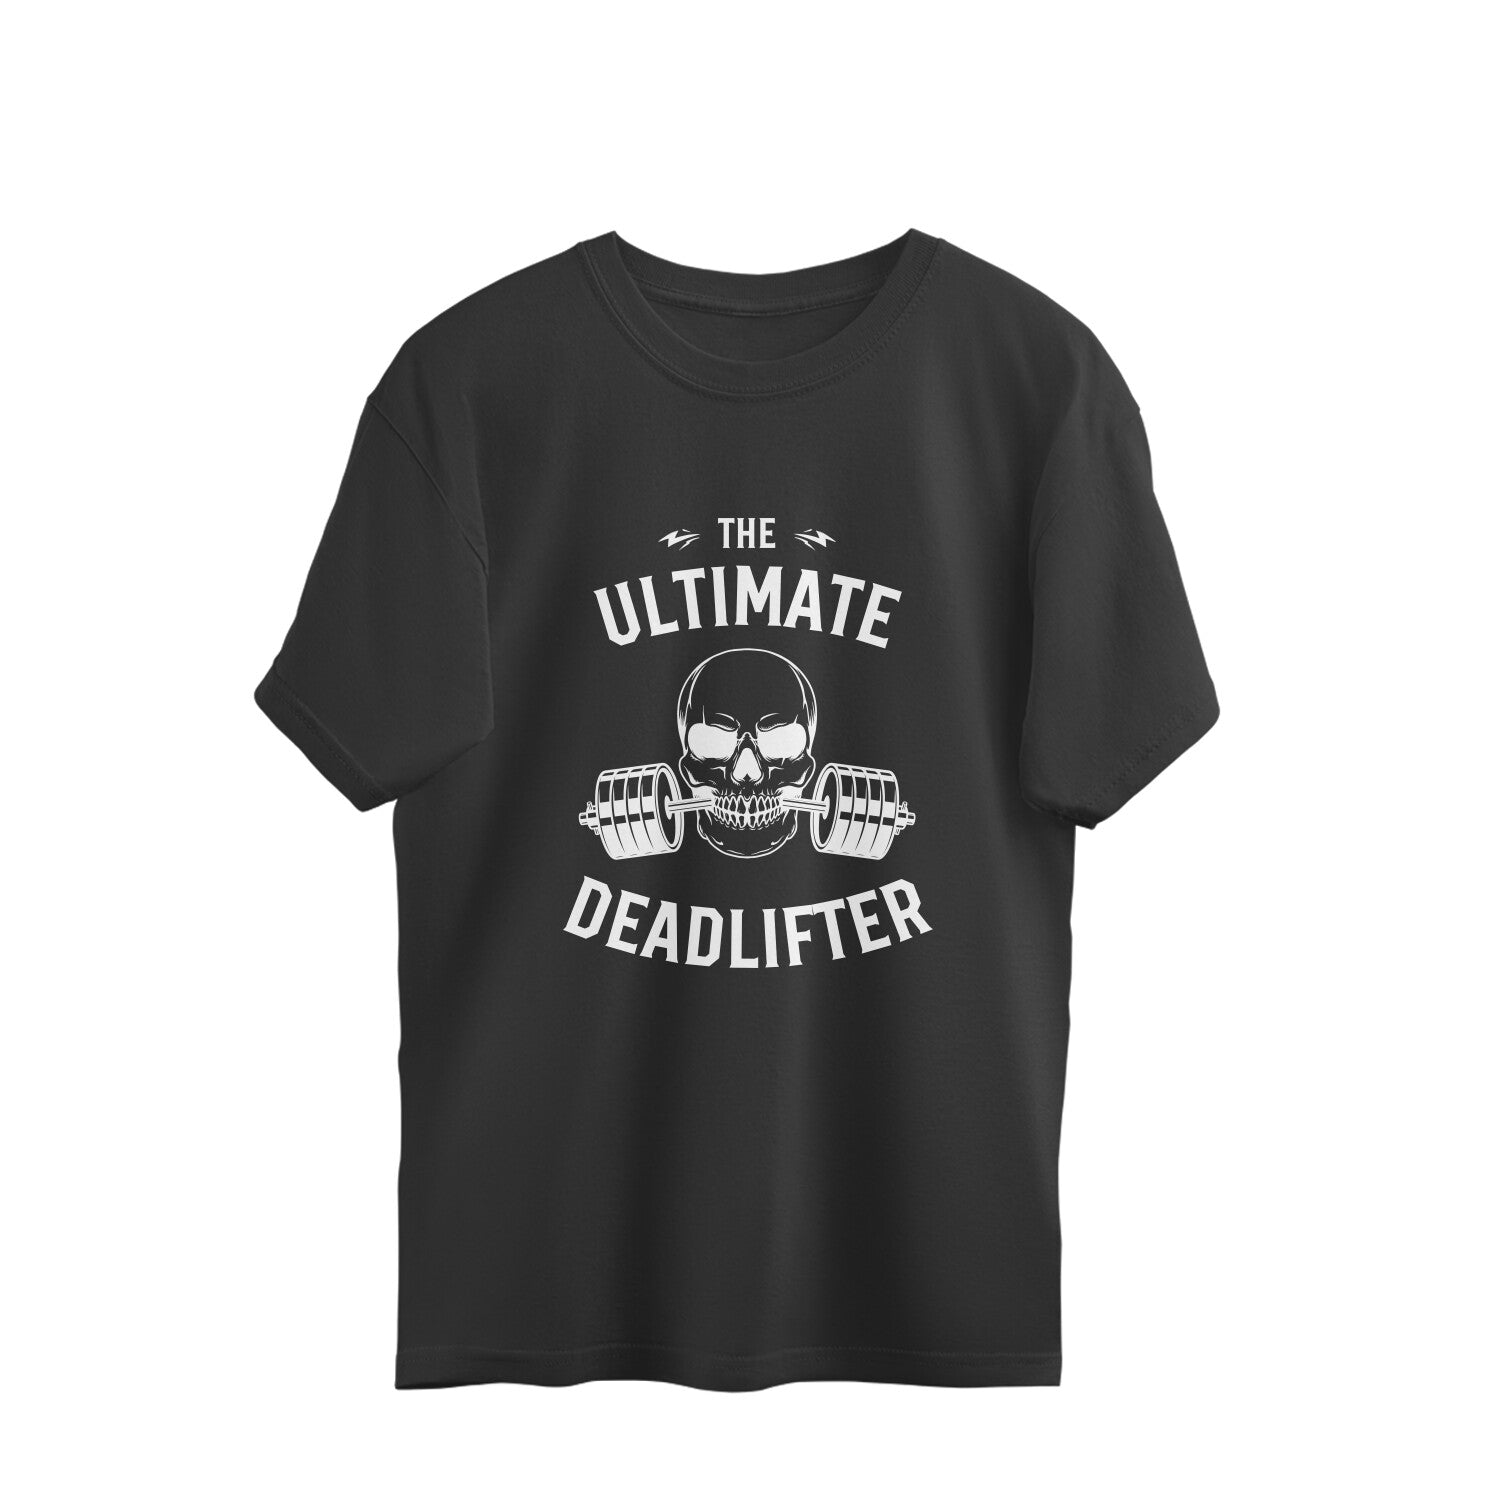 The ultimate deadlifter oversized T-Shirt